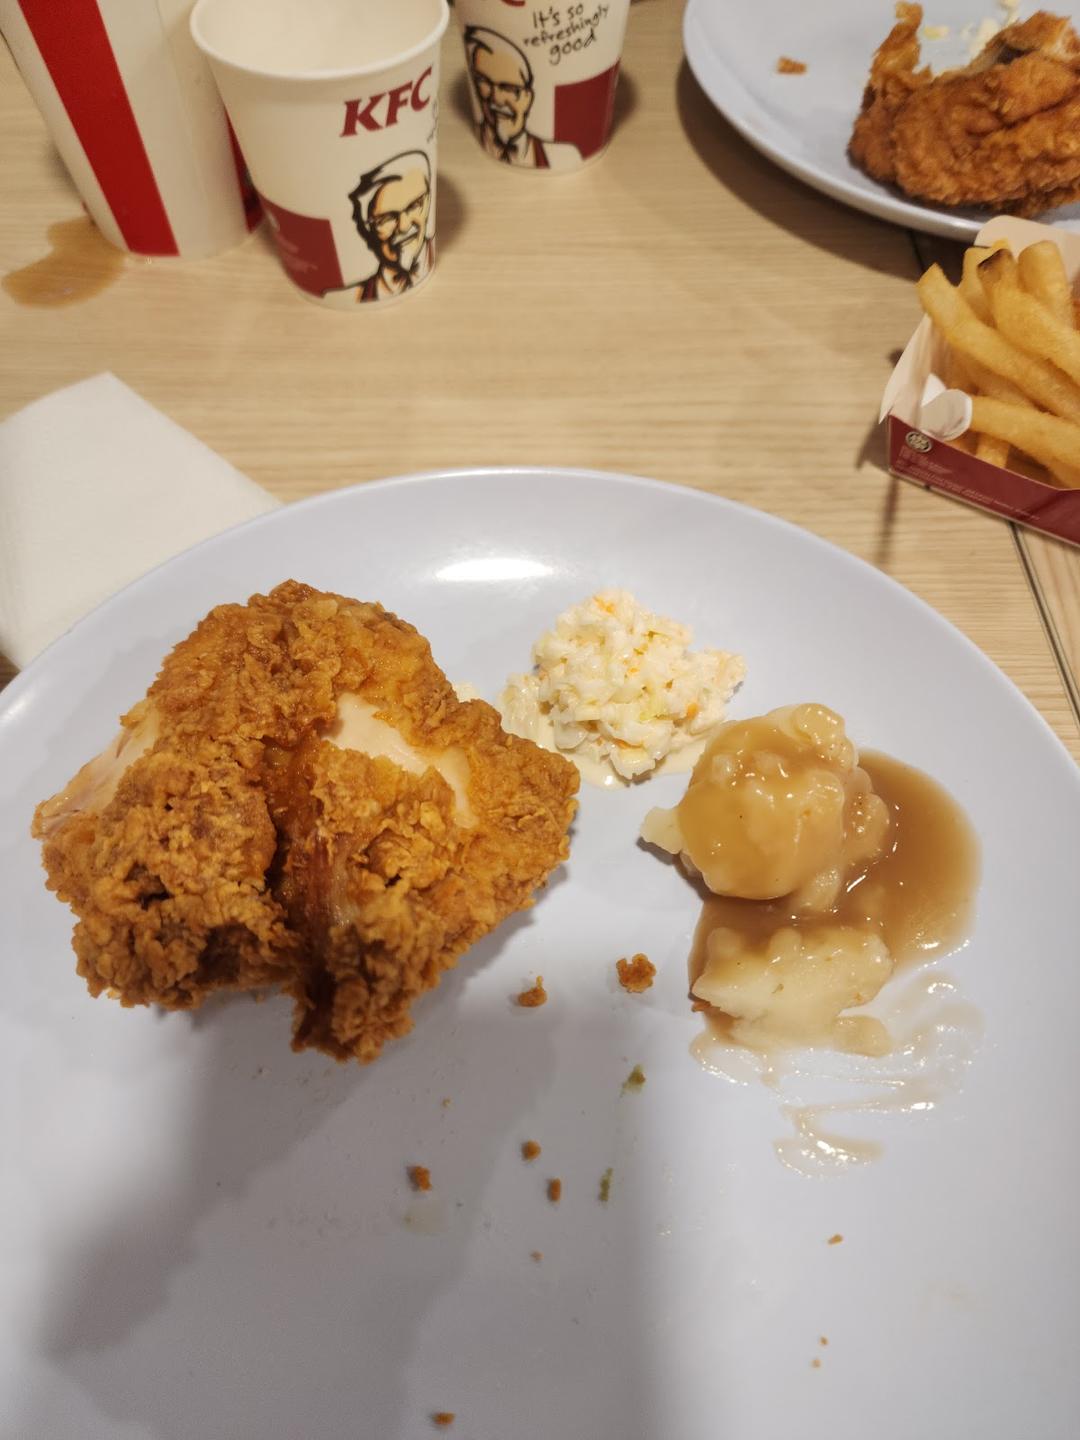 Photo of KFC Muar 1 - Muar, Johor, Malaysia